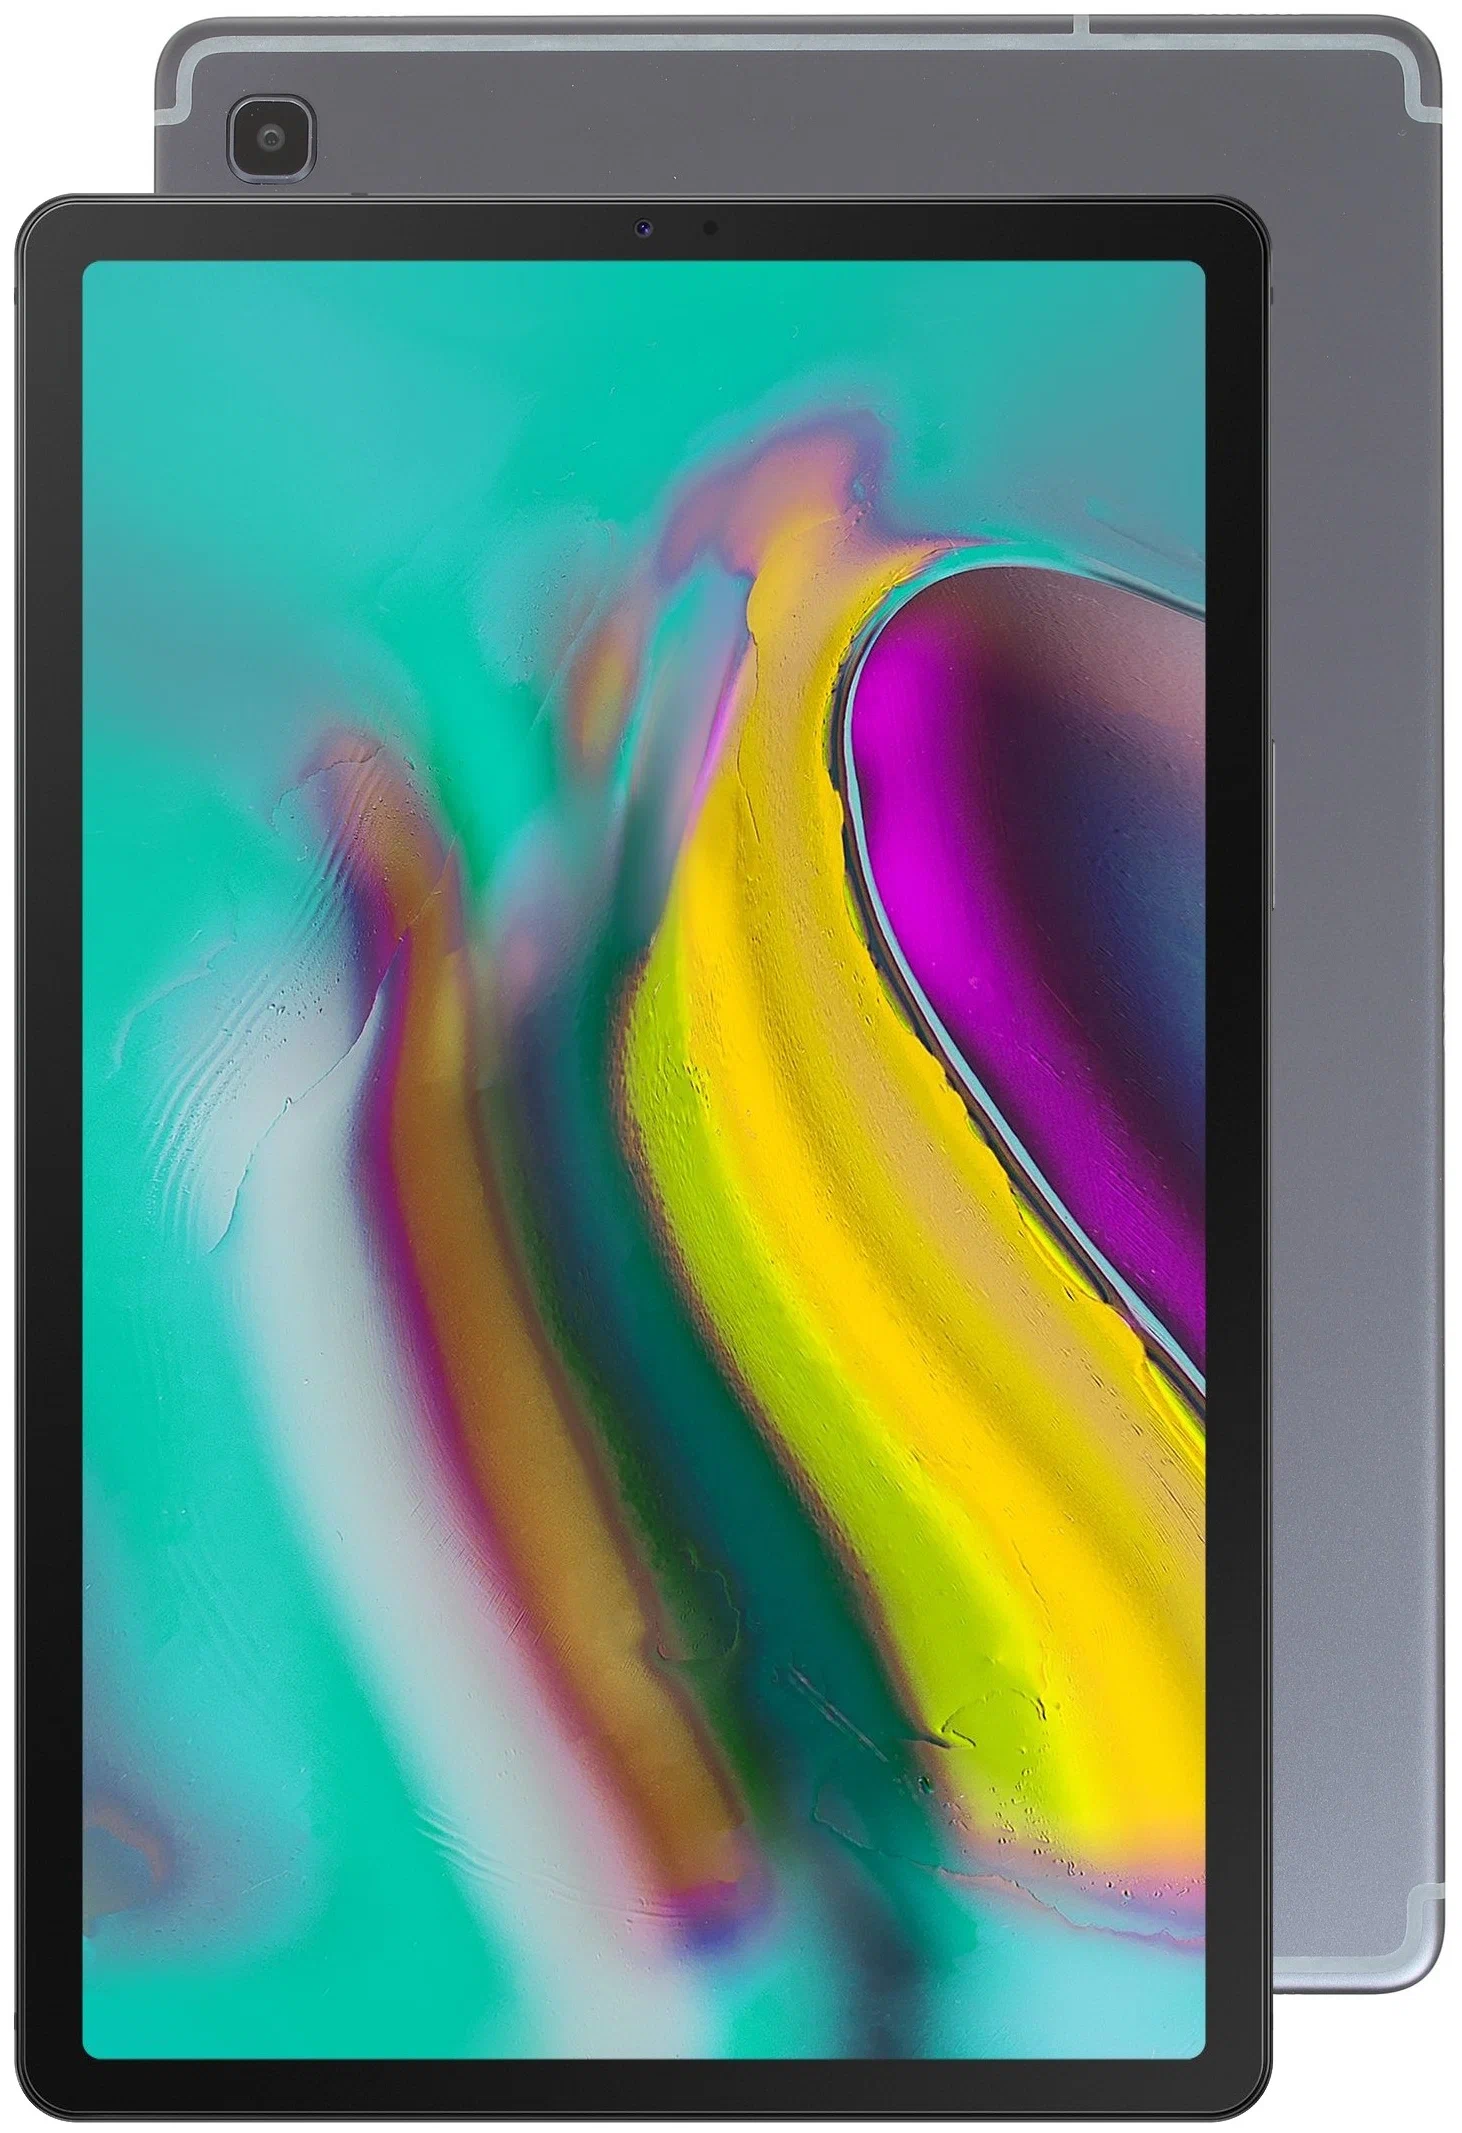 Samsung Galaxy Tab S5e 10.5 SM-T725 (2019) - экран: 10.5" (2560x1600), 2K QHD Super AMOLED , 60 Гц